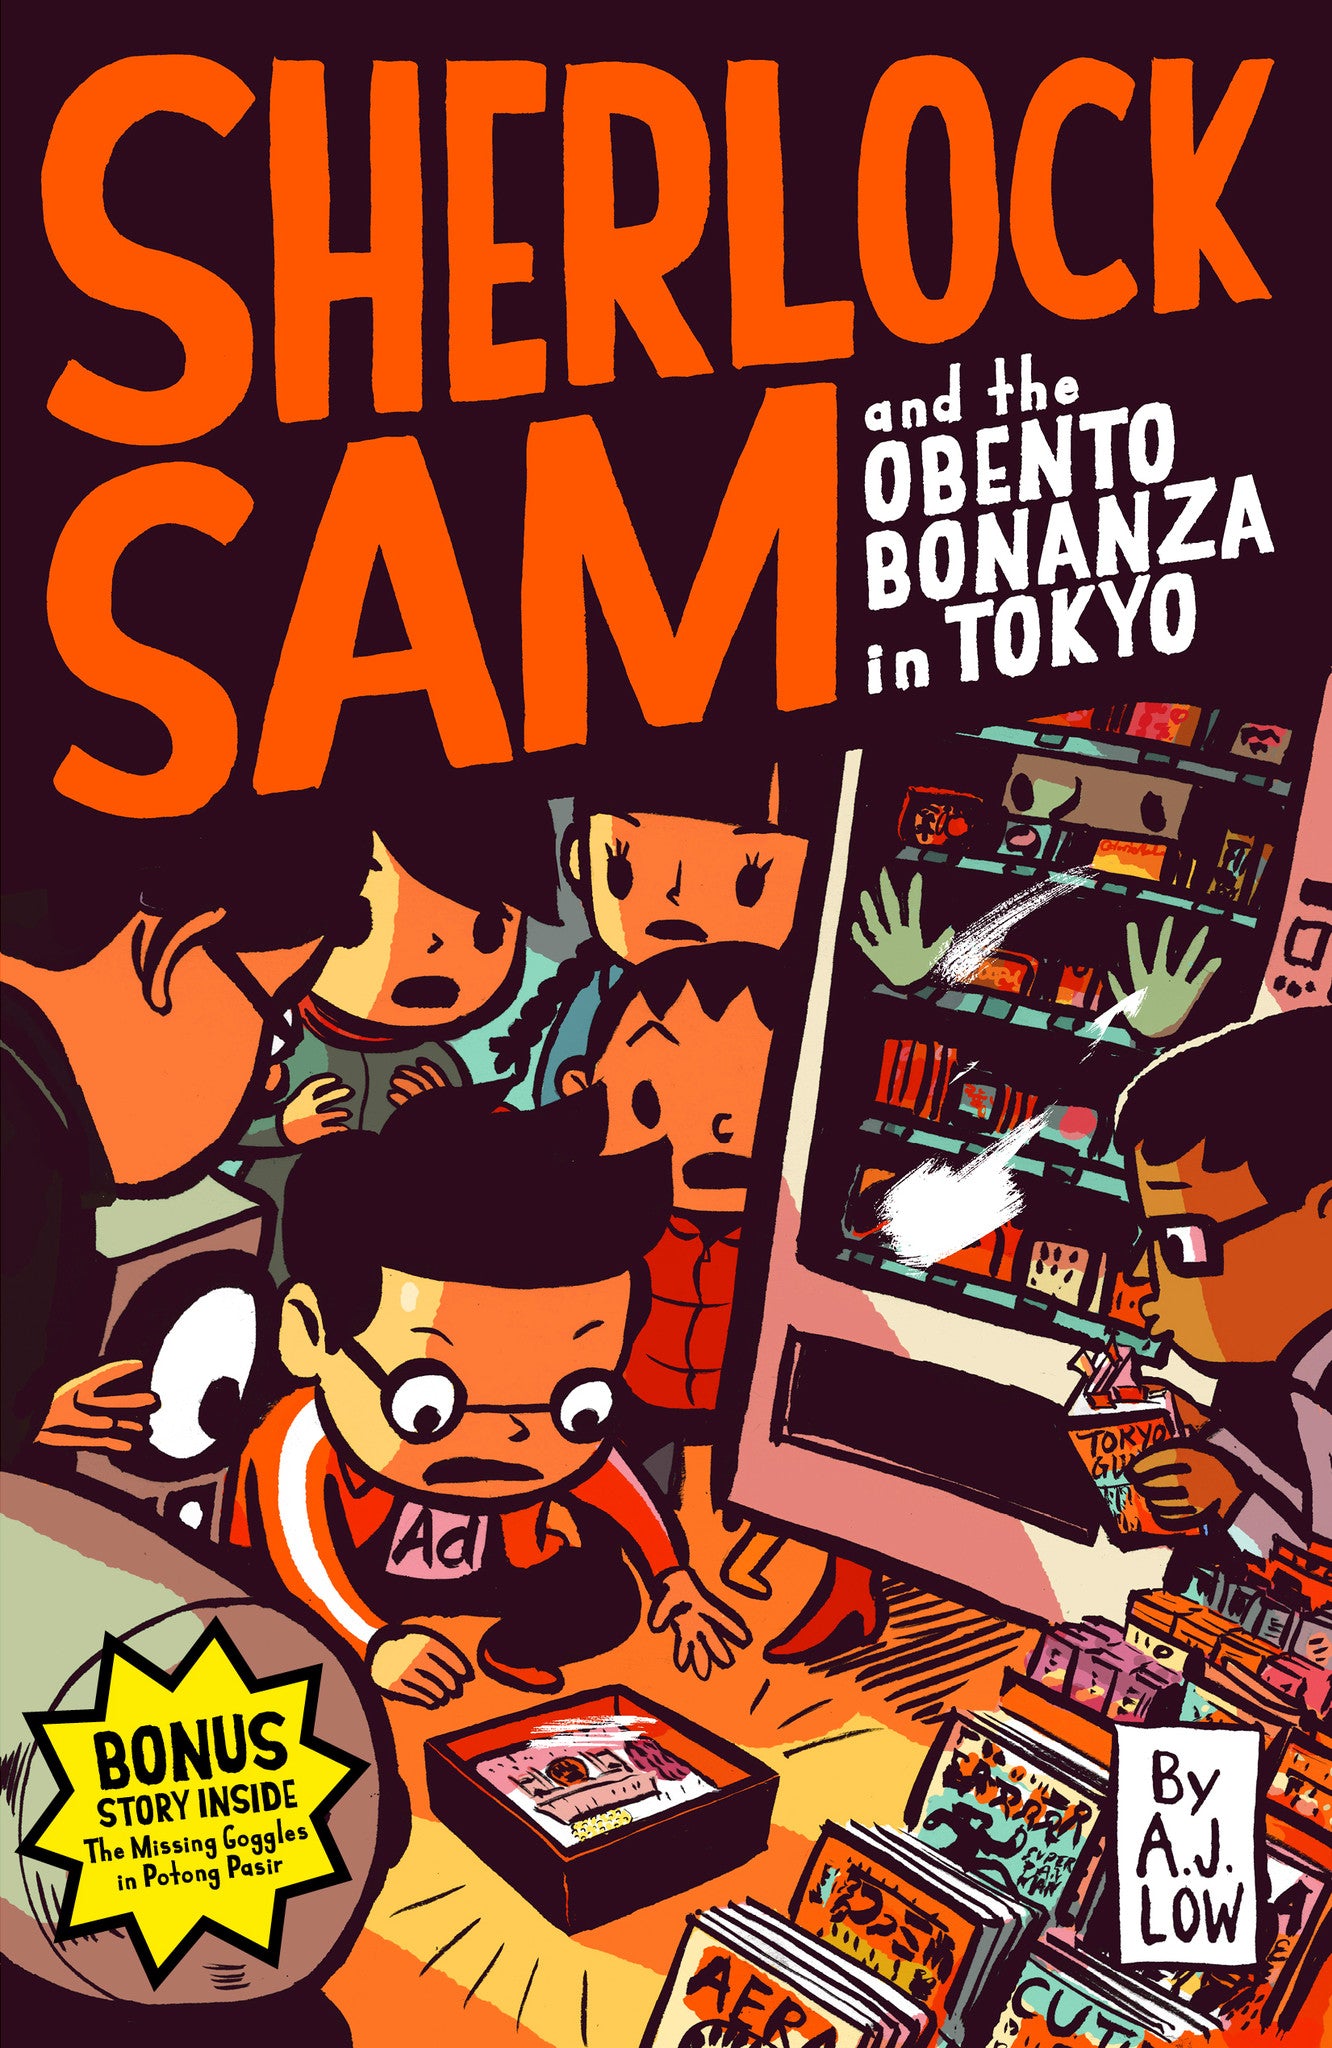 Sherlock Sam and the Obento Bonanza in Tokyo (book 9)